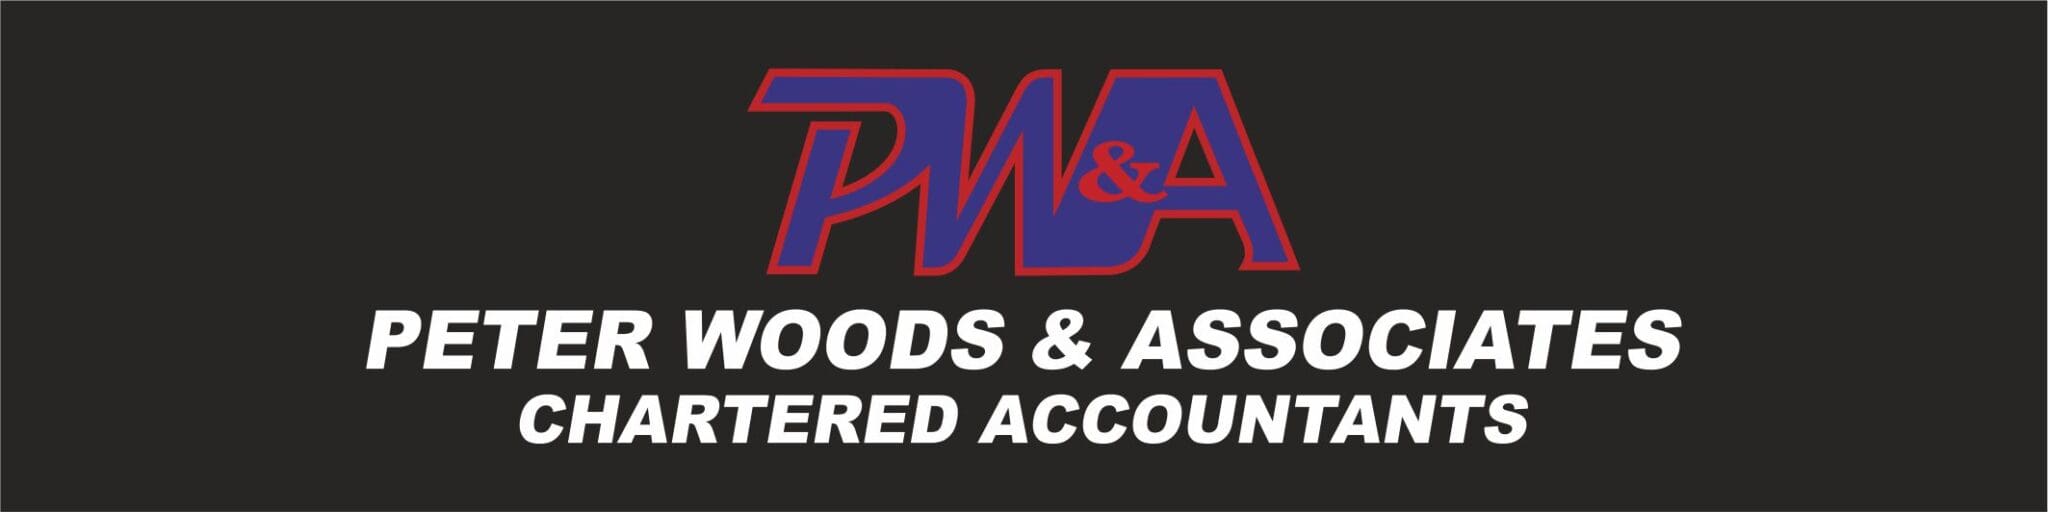 Peter Woods and Associates sponsor logo